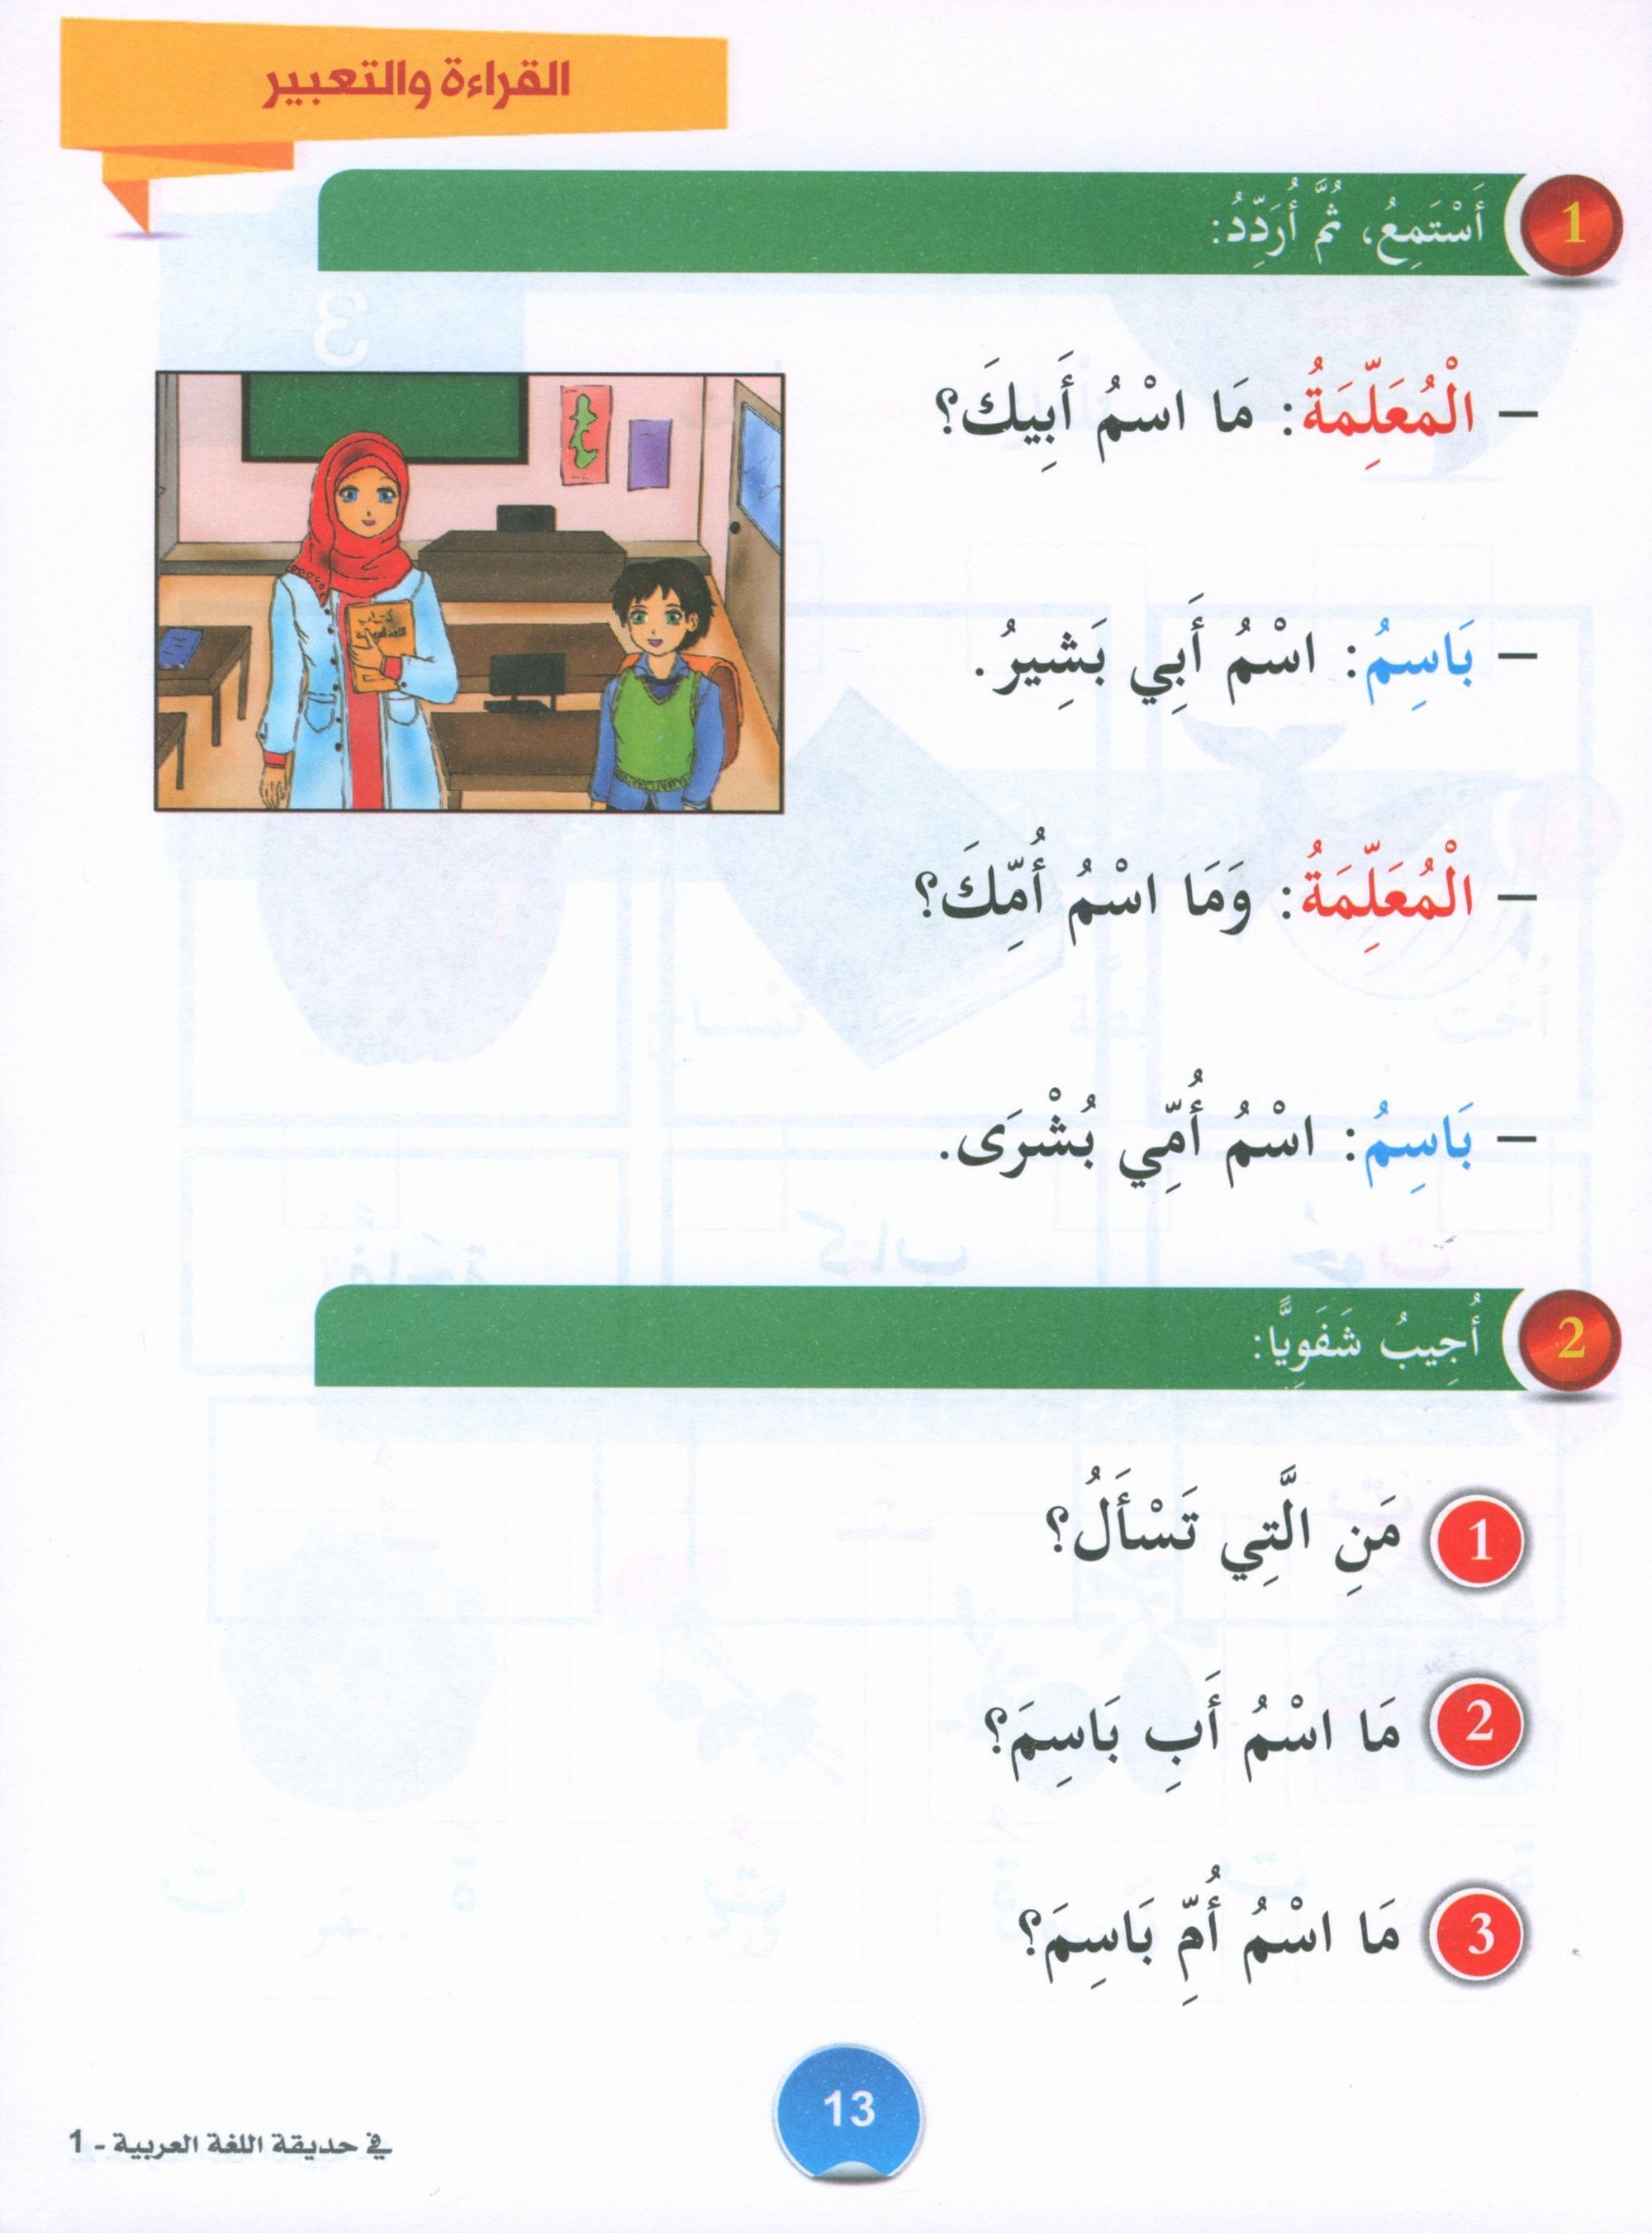 In the Arabic Garden Textbook Level 1 في حديقة اللغة العربية